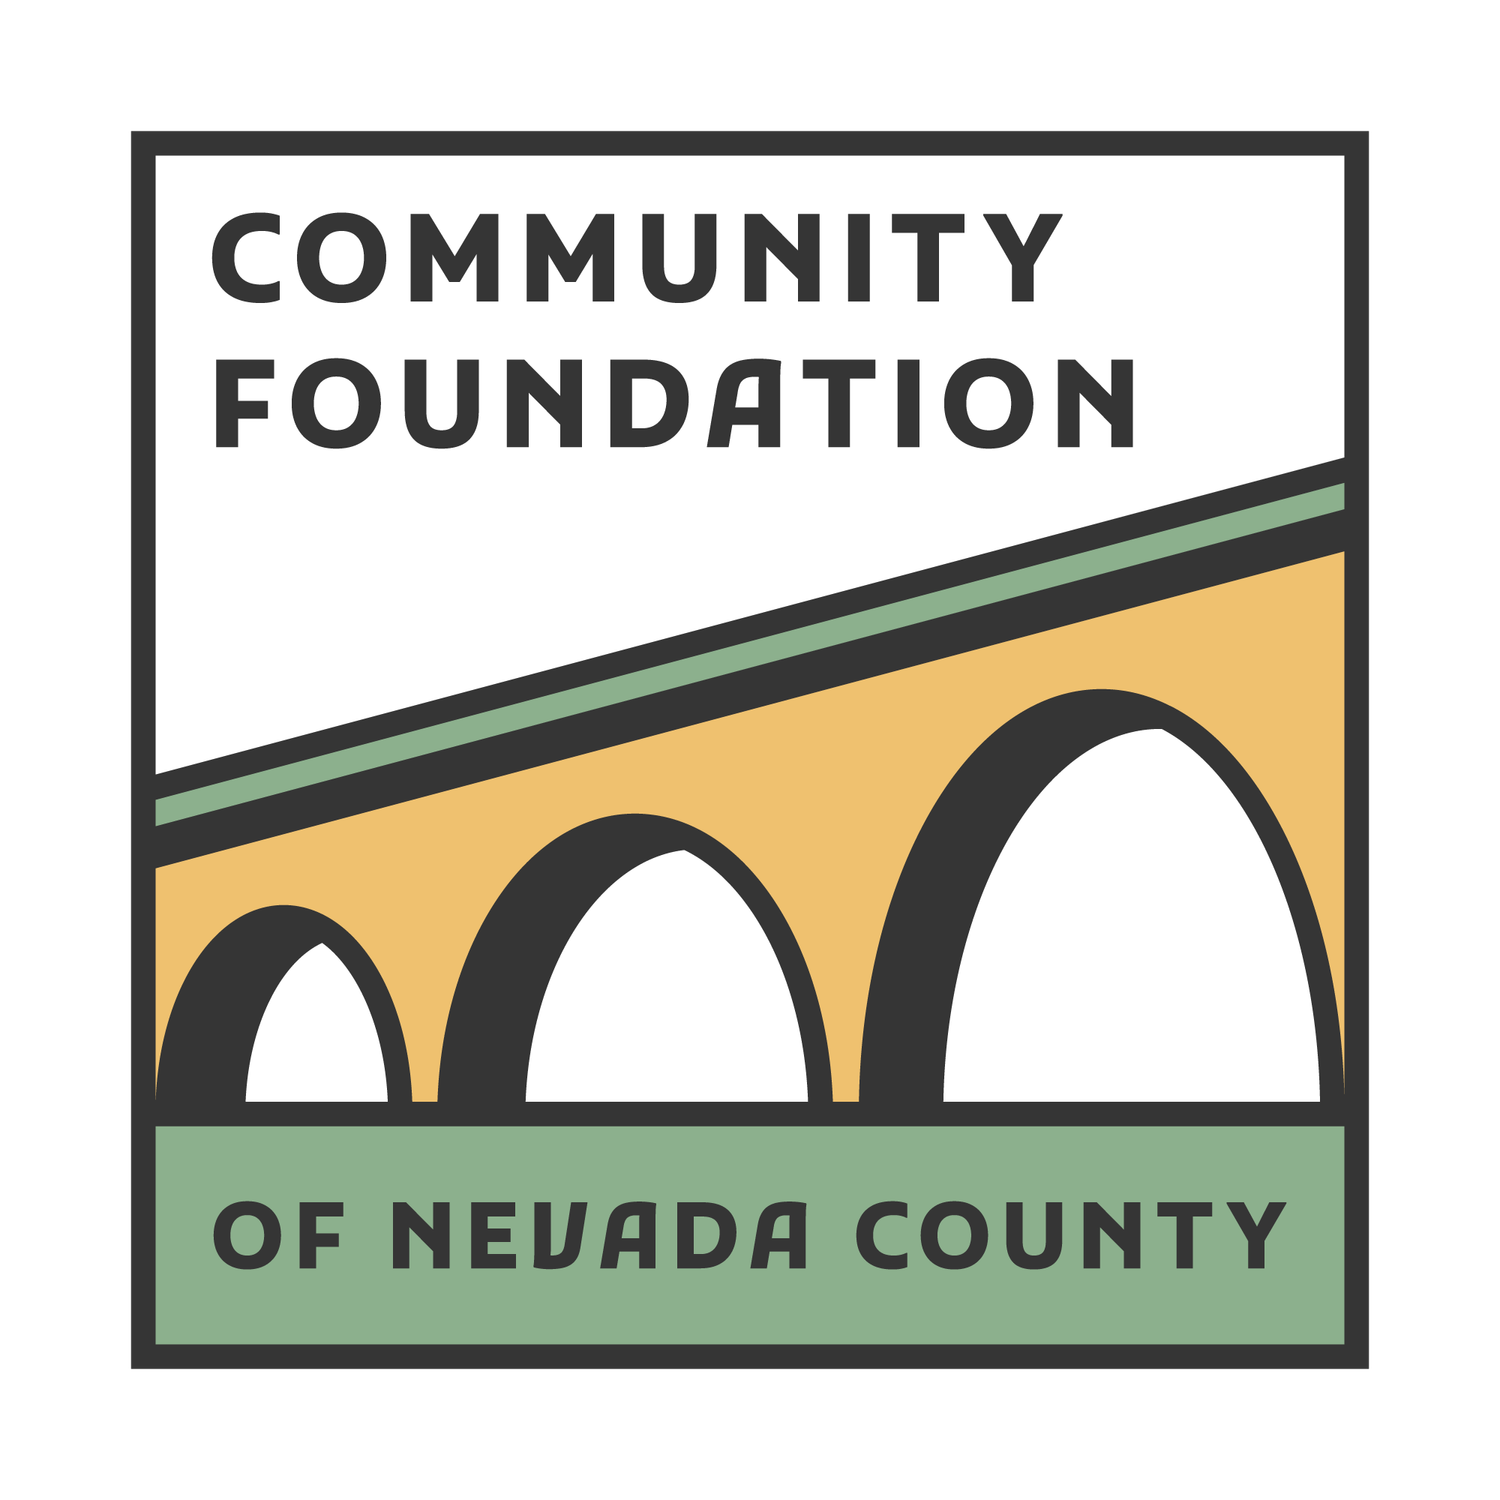 The Community Foundation of Nevada County